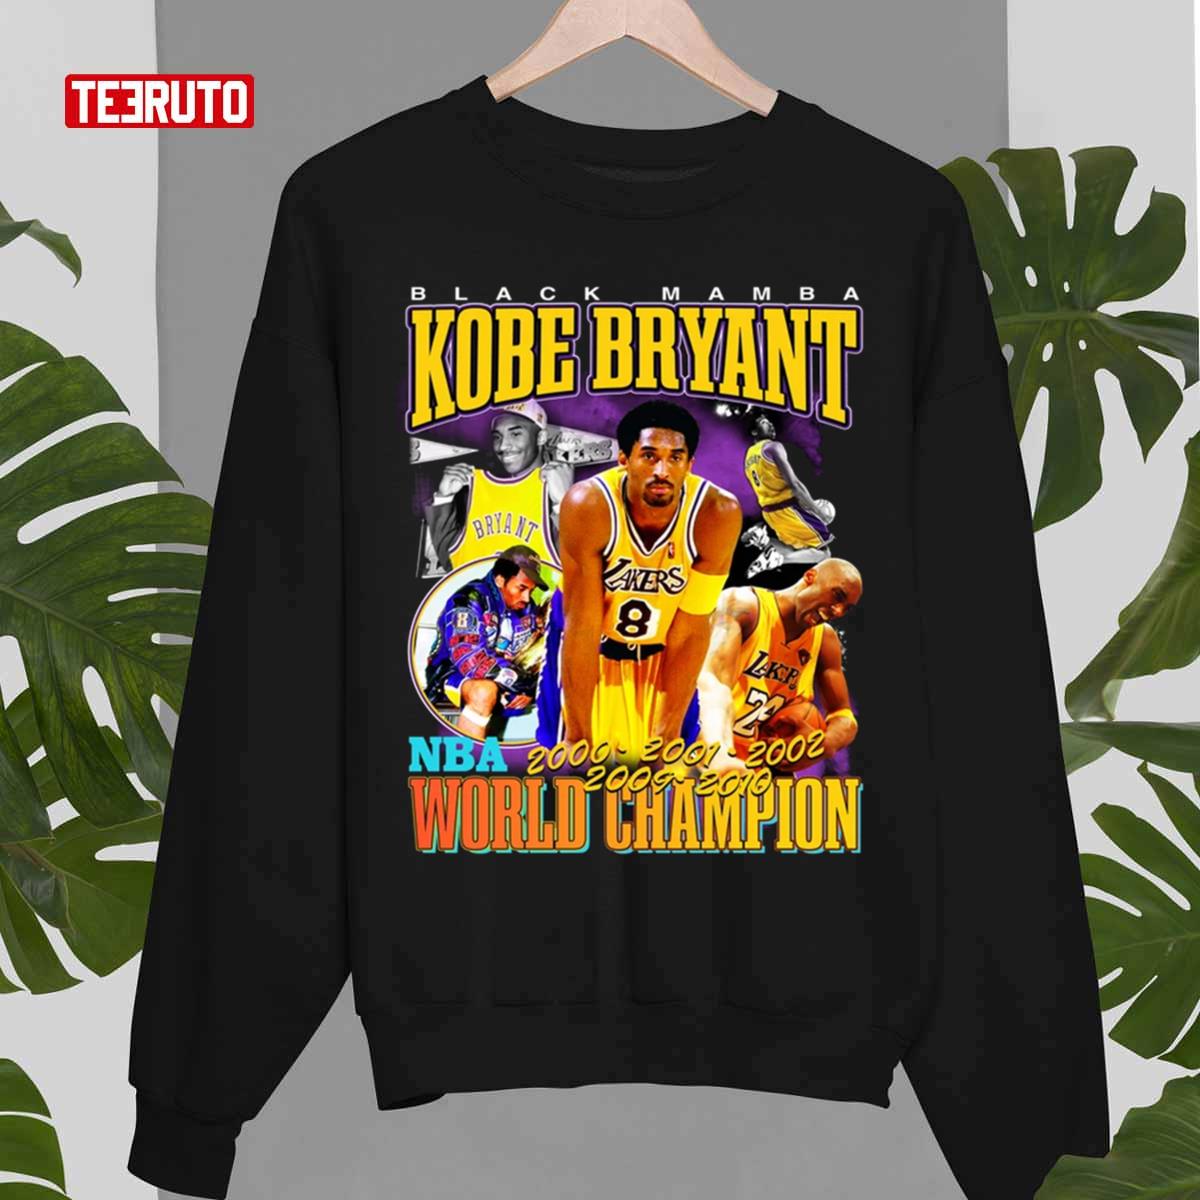 Black Mamba Kobe Bryant NBA World Champion Vintage Unisex T-Shirt